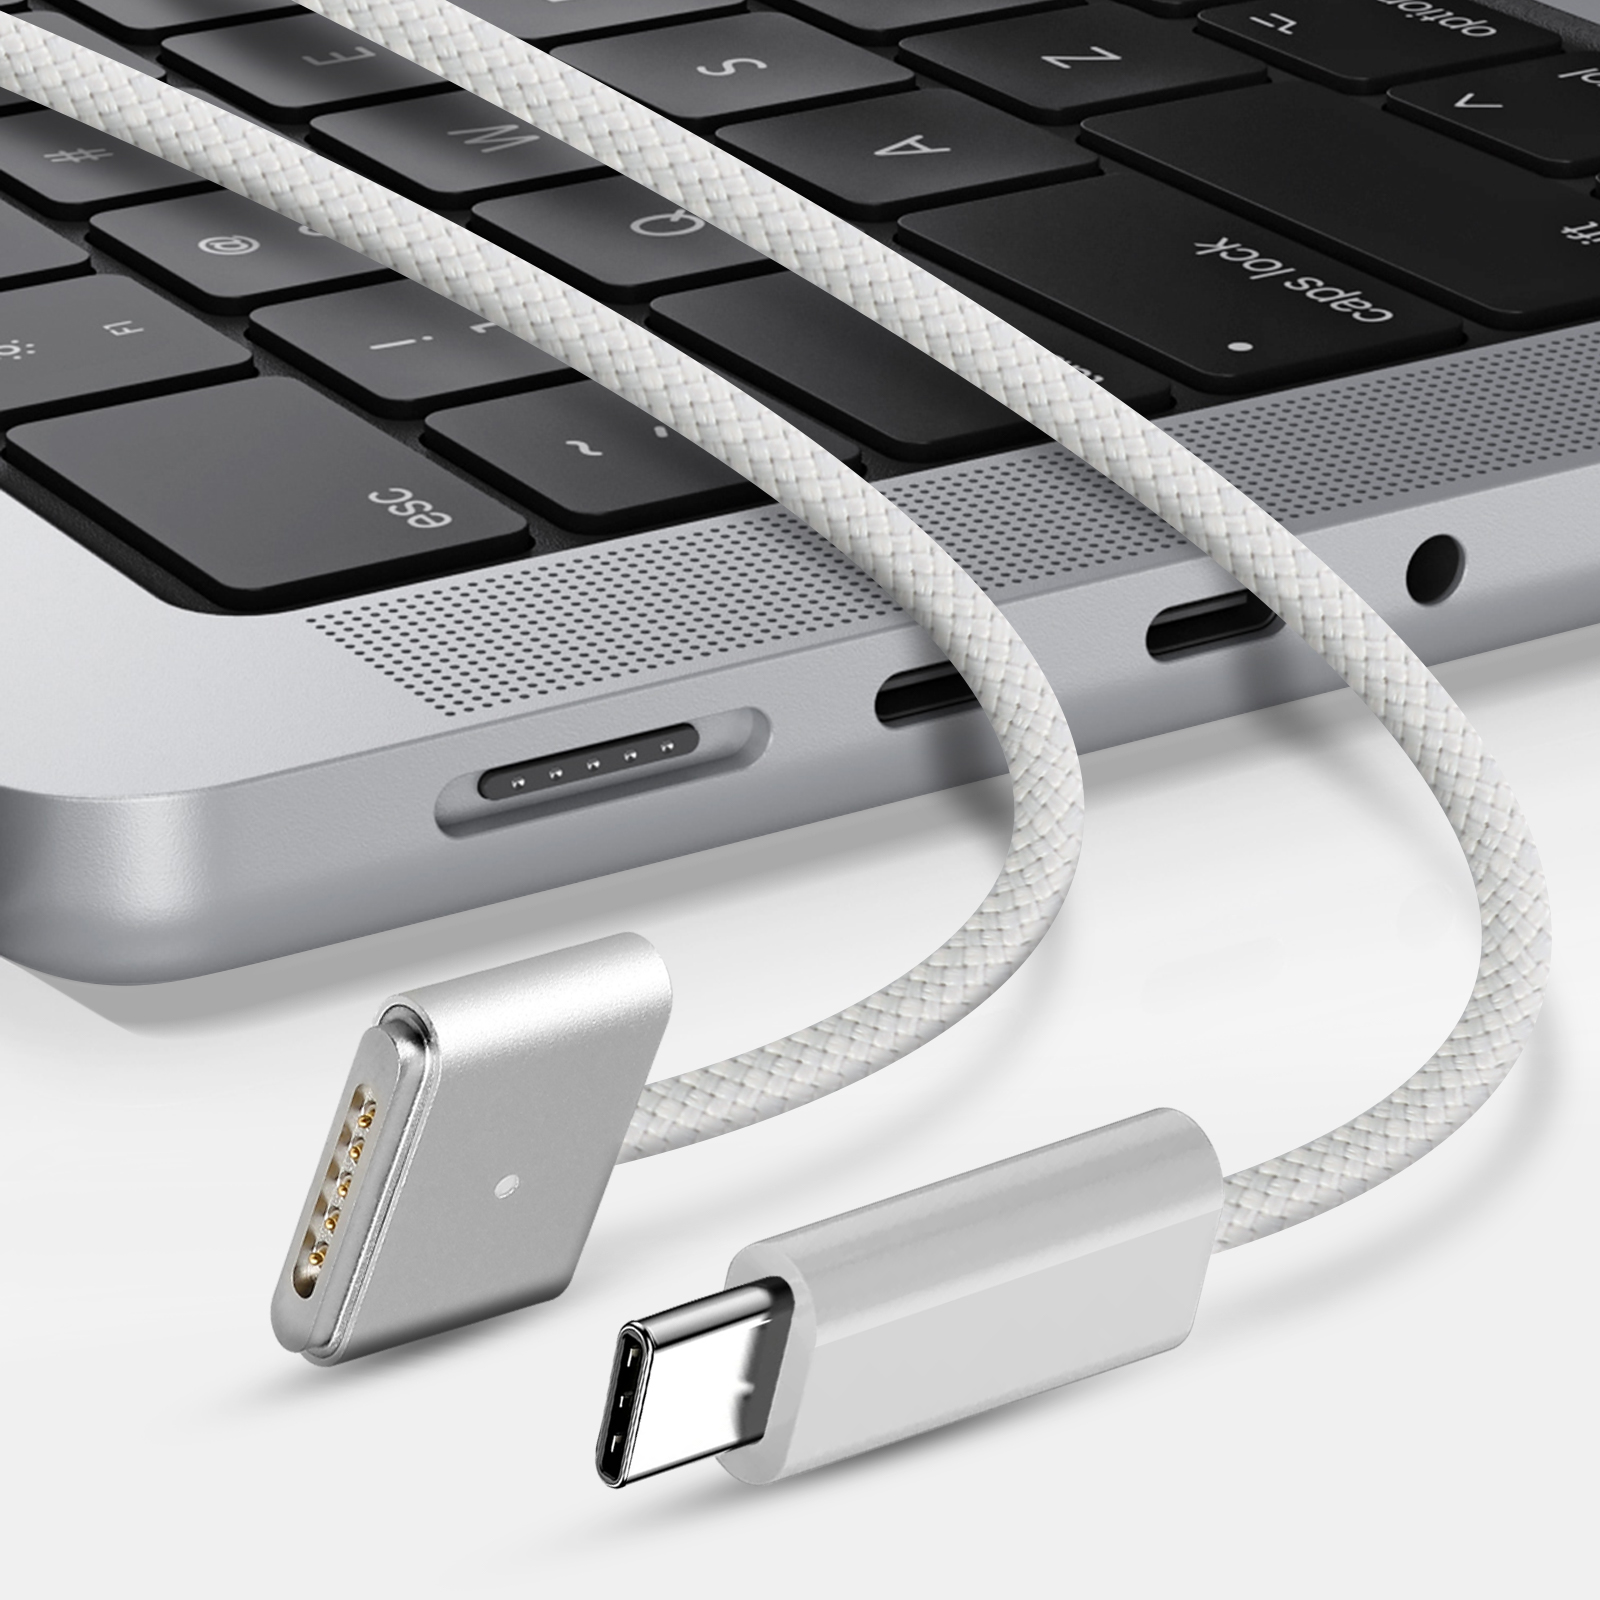 Original Apple MacBook USB-C / MagSafe 3 Kabel, Nylon Geflecht 2m – Weiß -  German